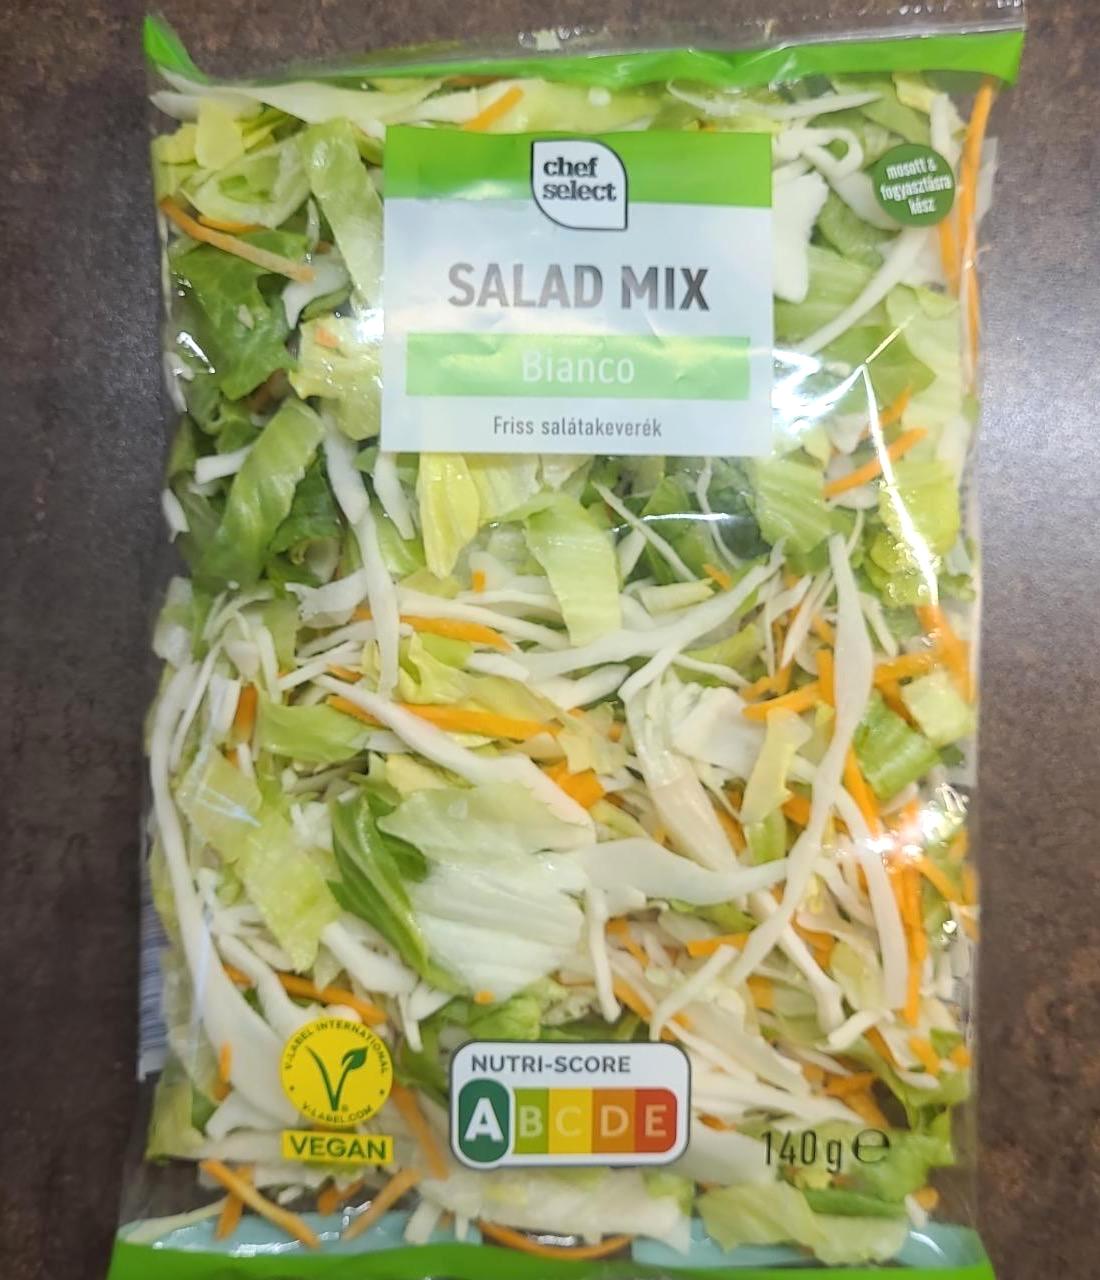 Képek - Salad mix Bianco Chef Select